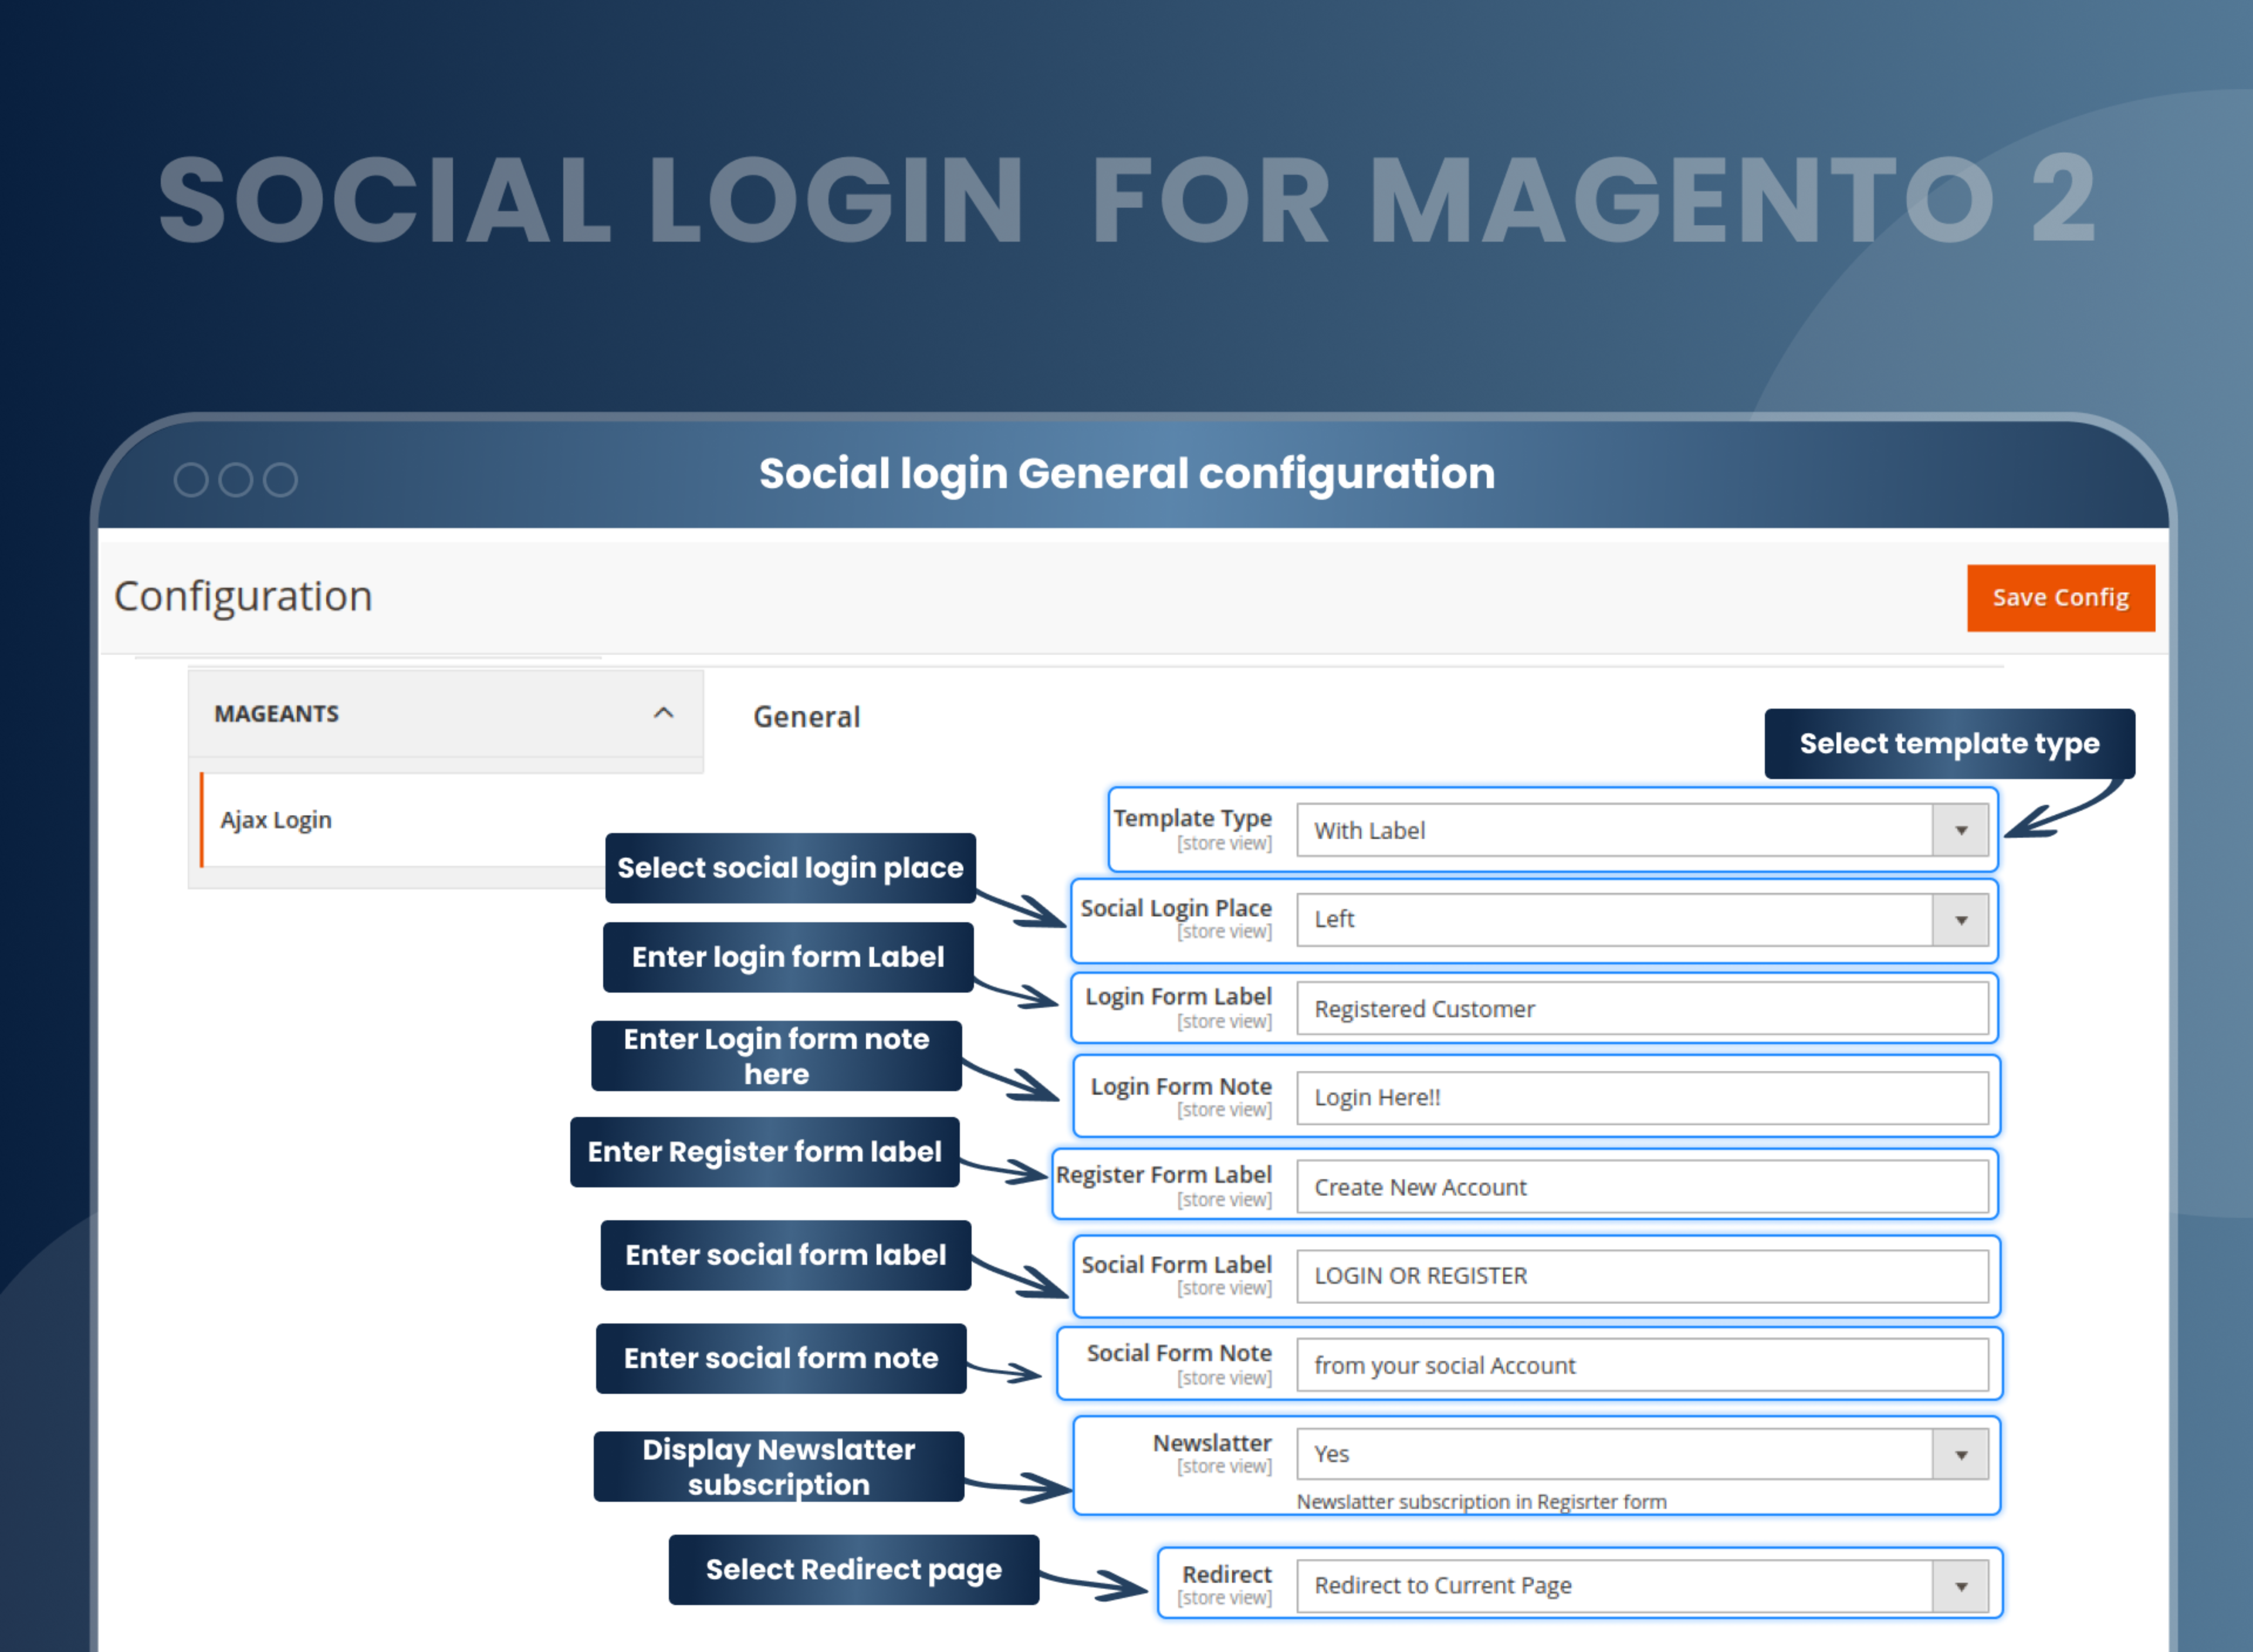 Social login General configuration